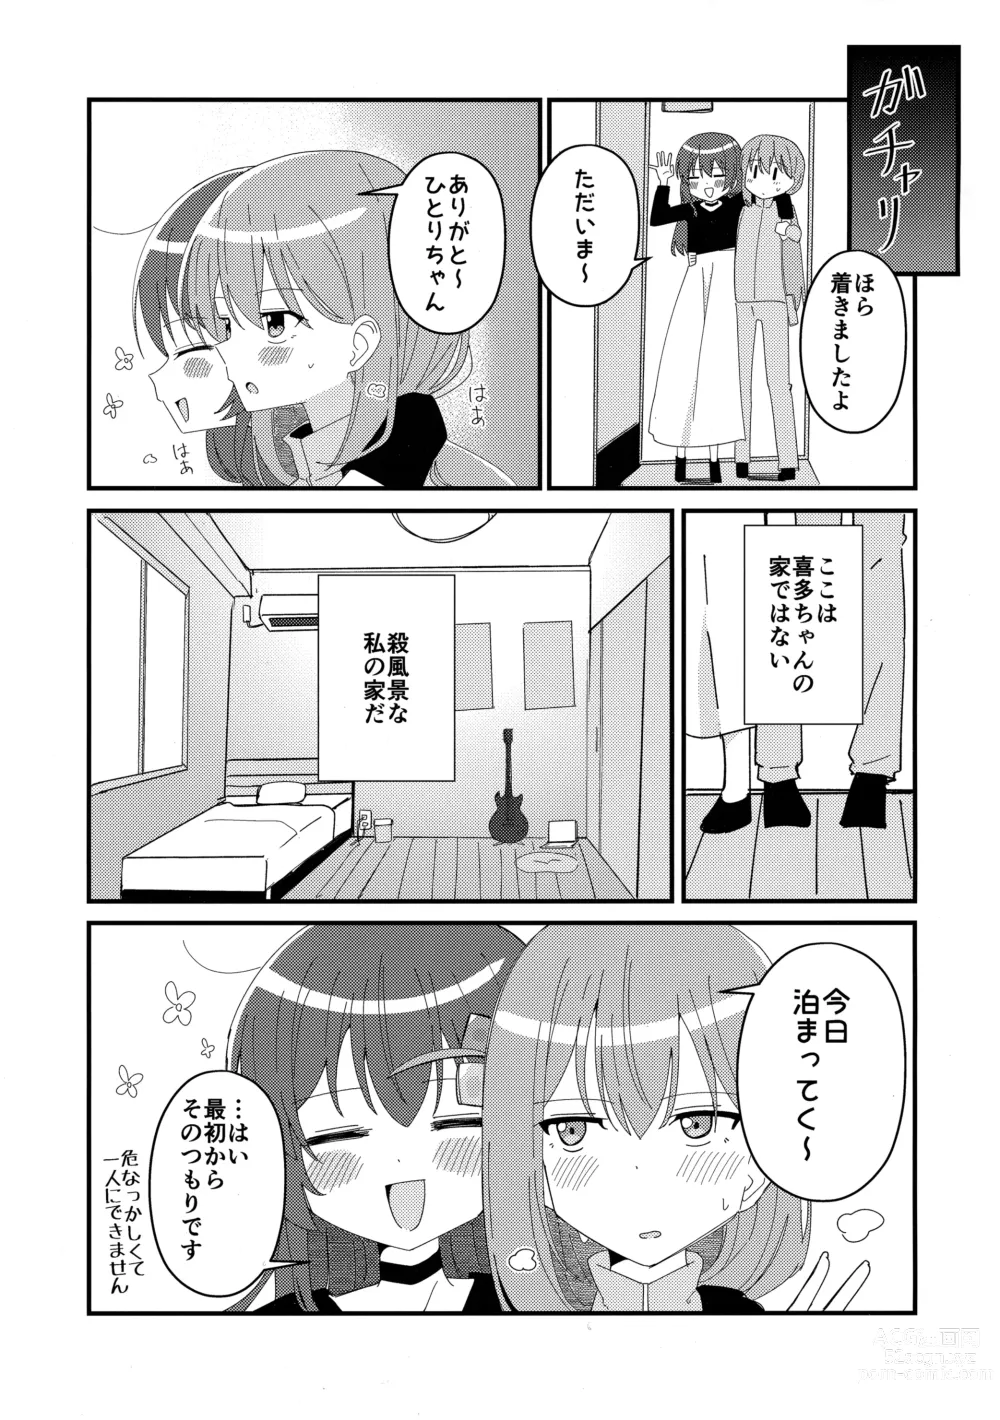 Page 6 of doujinshi Ikuyo Distortion